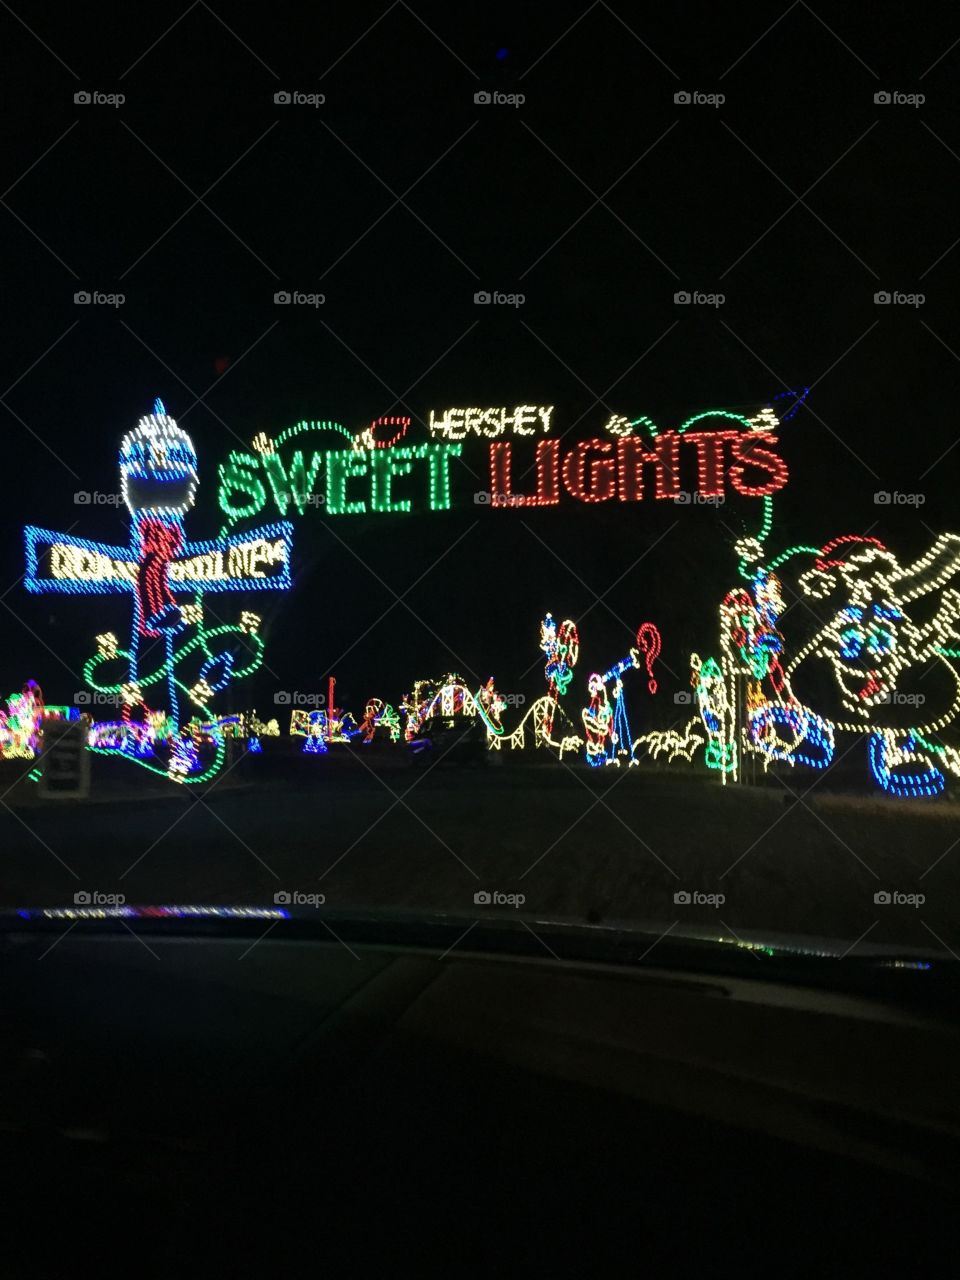 Hershey Park sweet lights Christmas display 